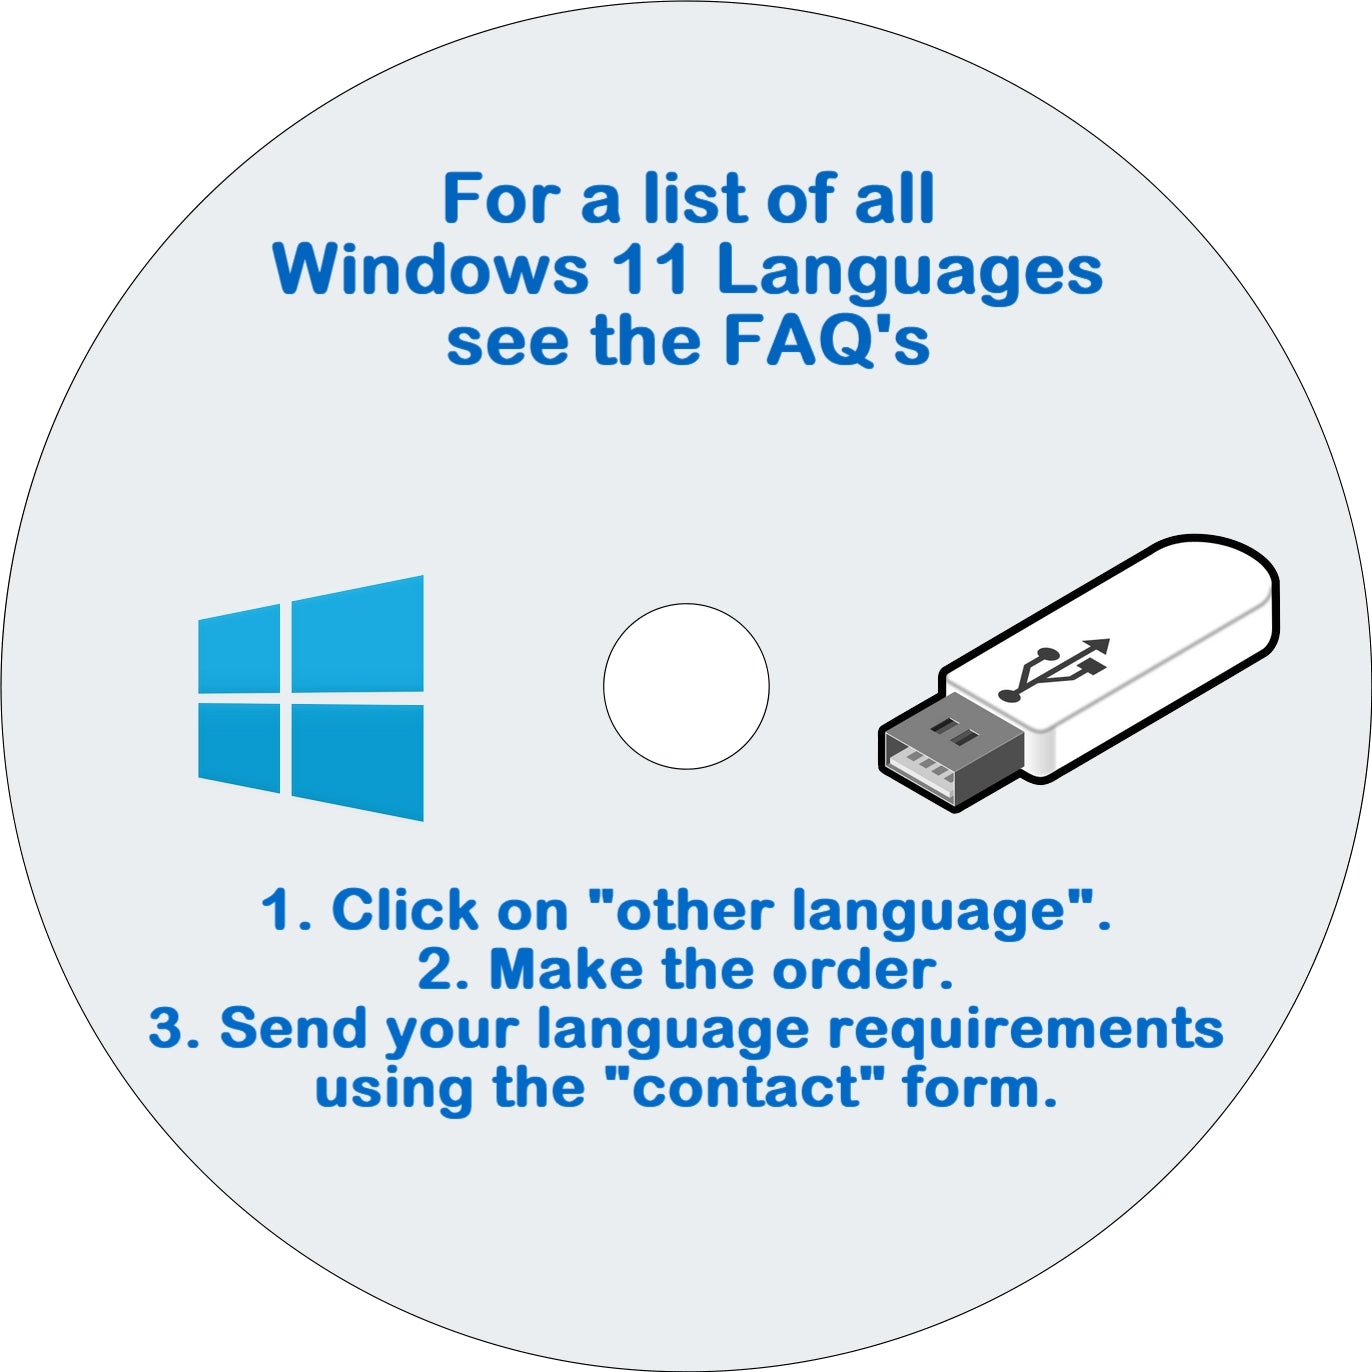 Windows 11 USB 64 Bit